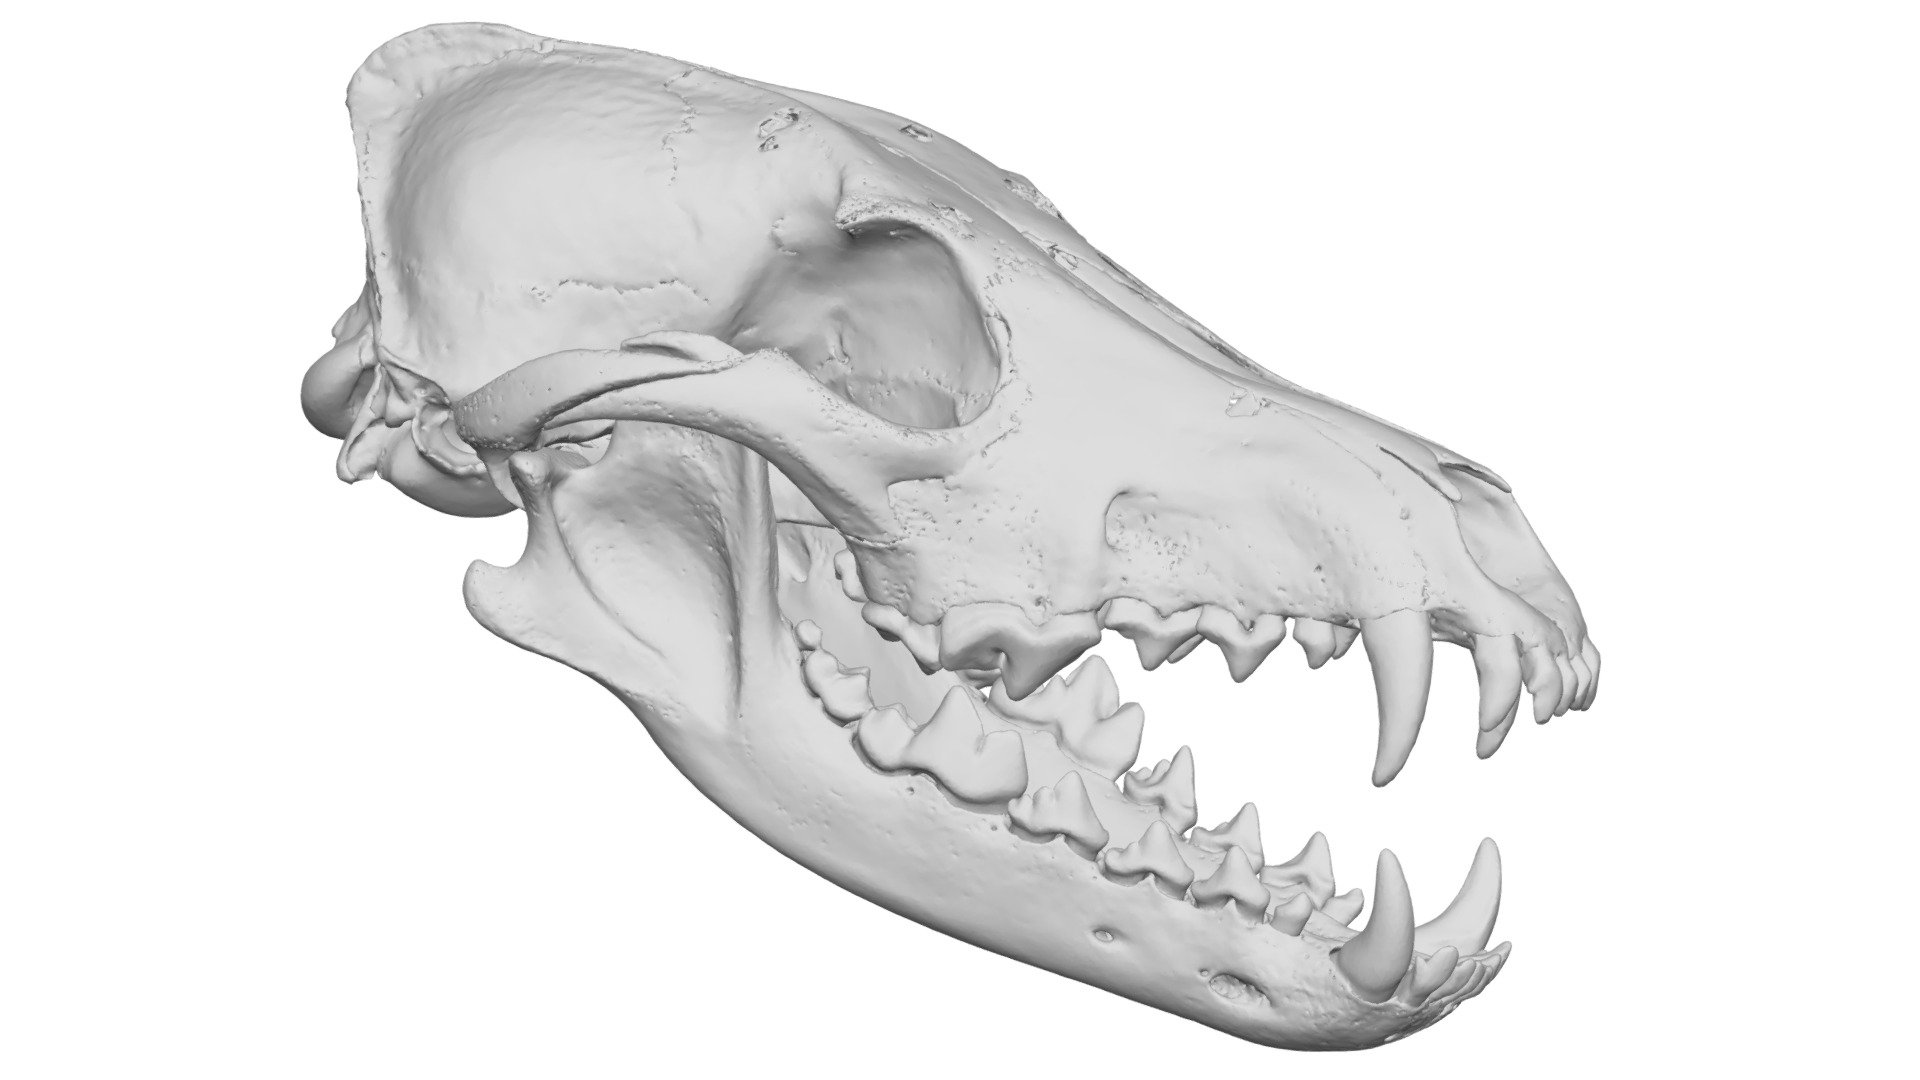 Coyote Skull 3d Model By Havenmetrology Ddb8e0c Sketchfab